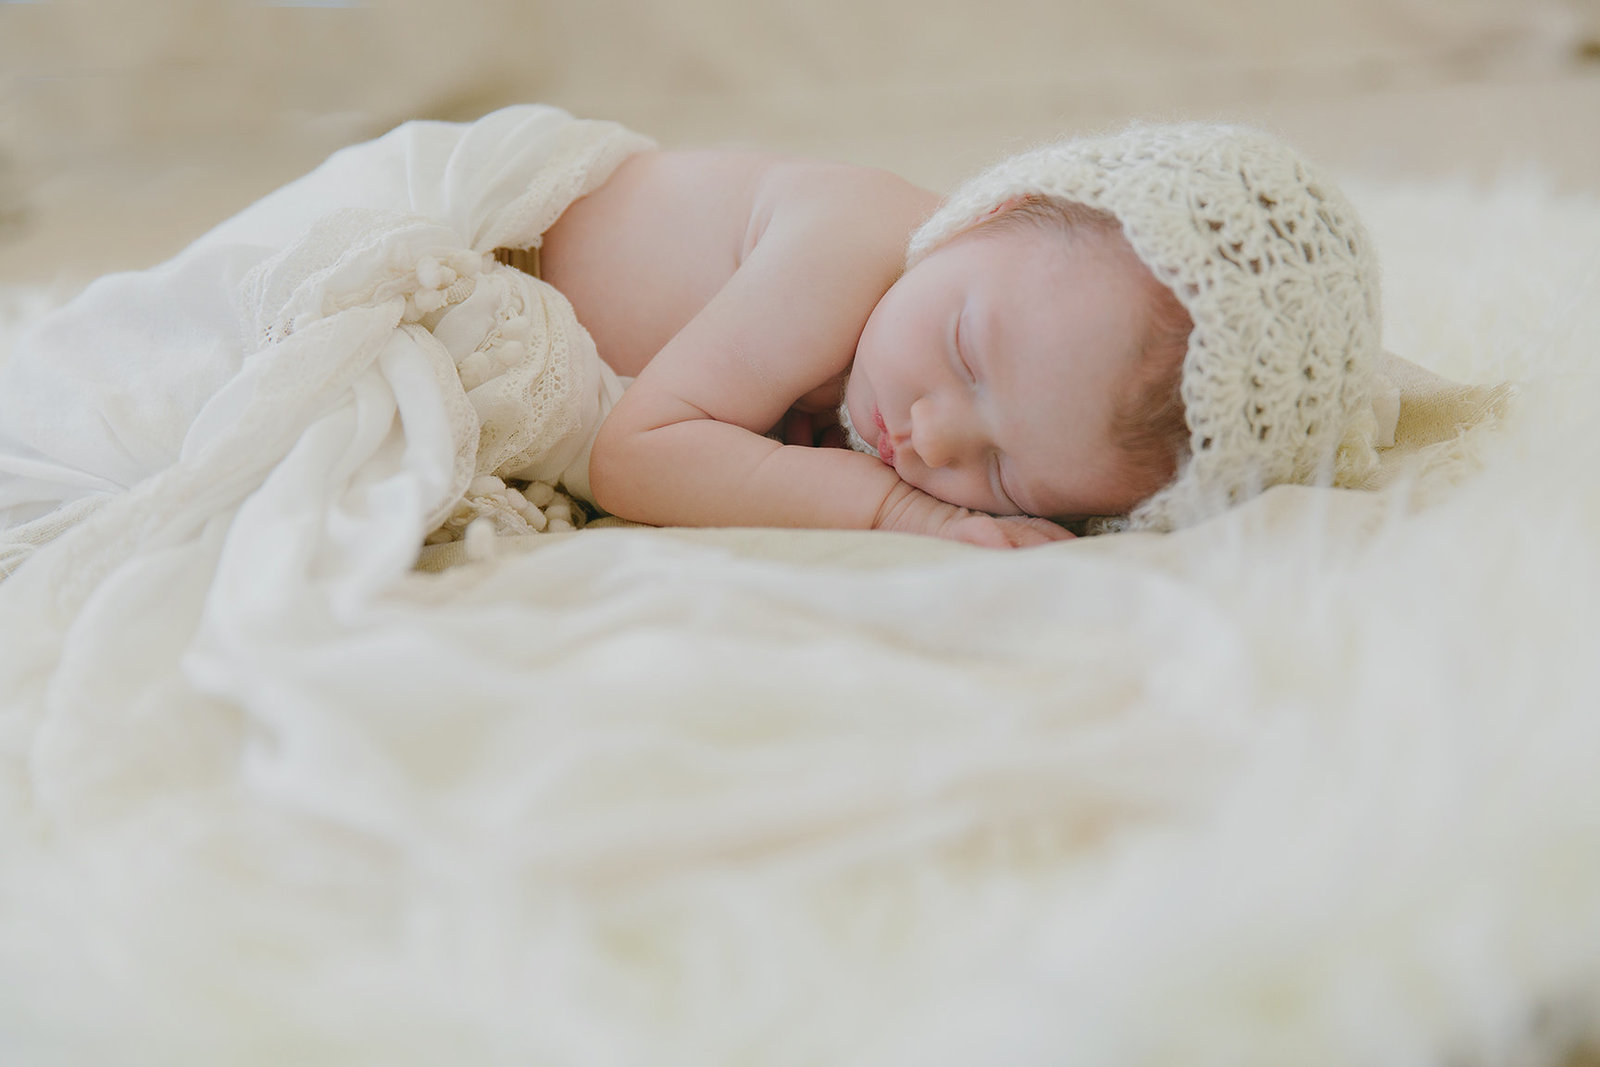 wendy parrish is a missoula MT based newborn photographer